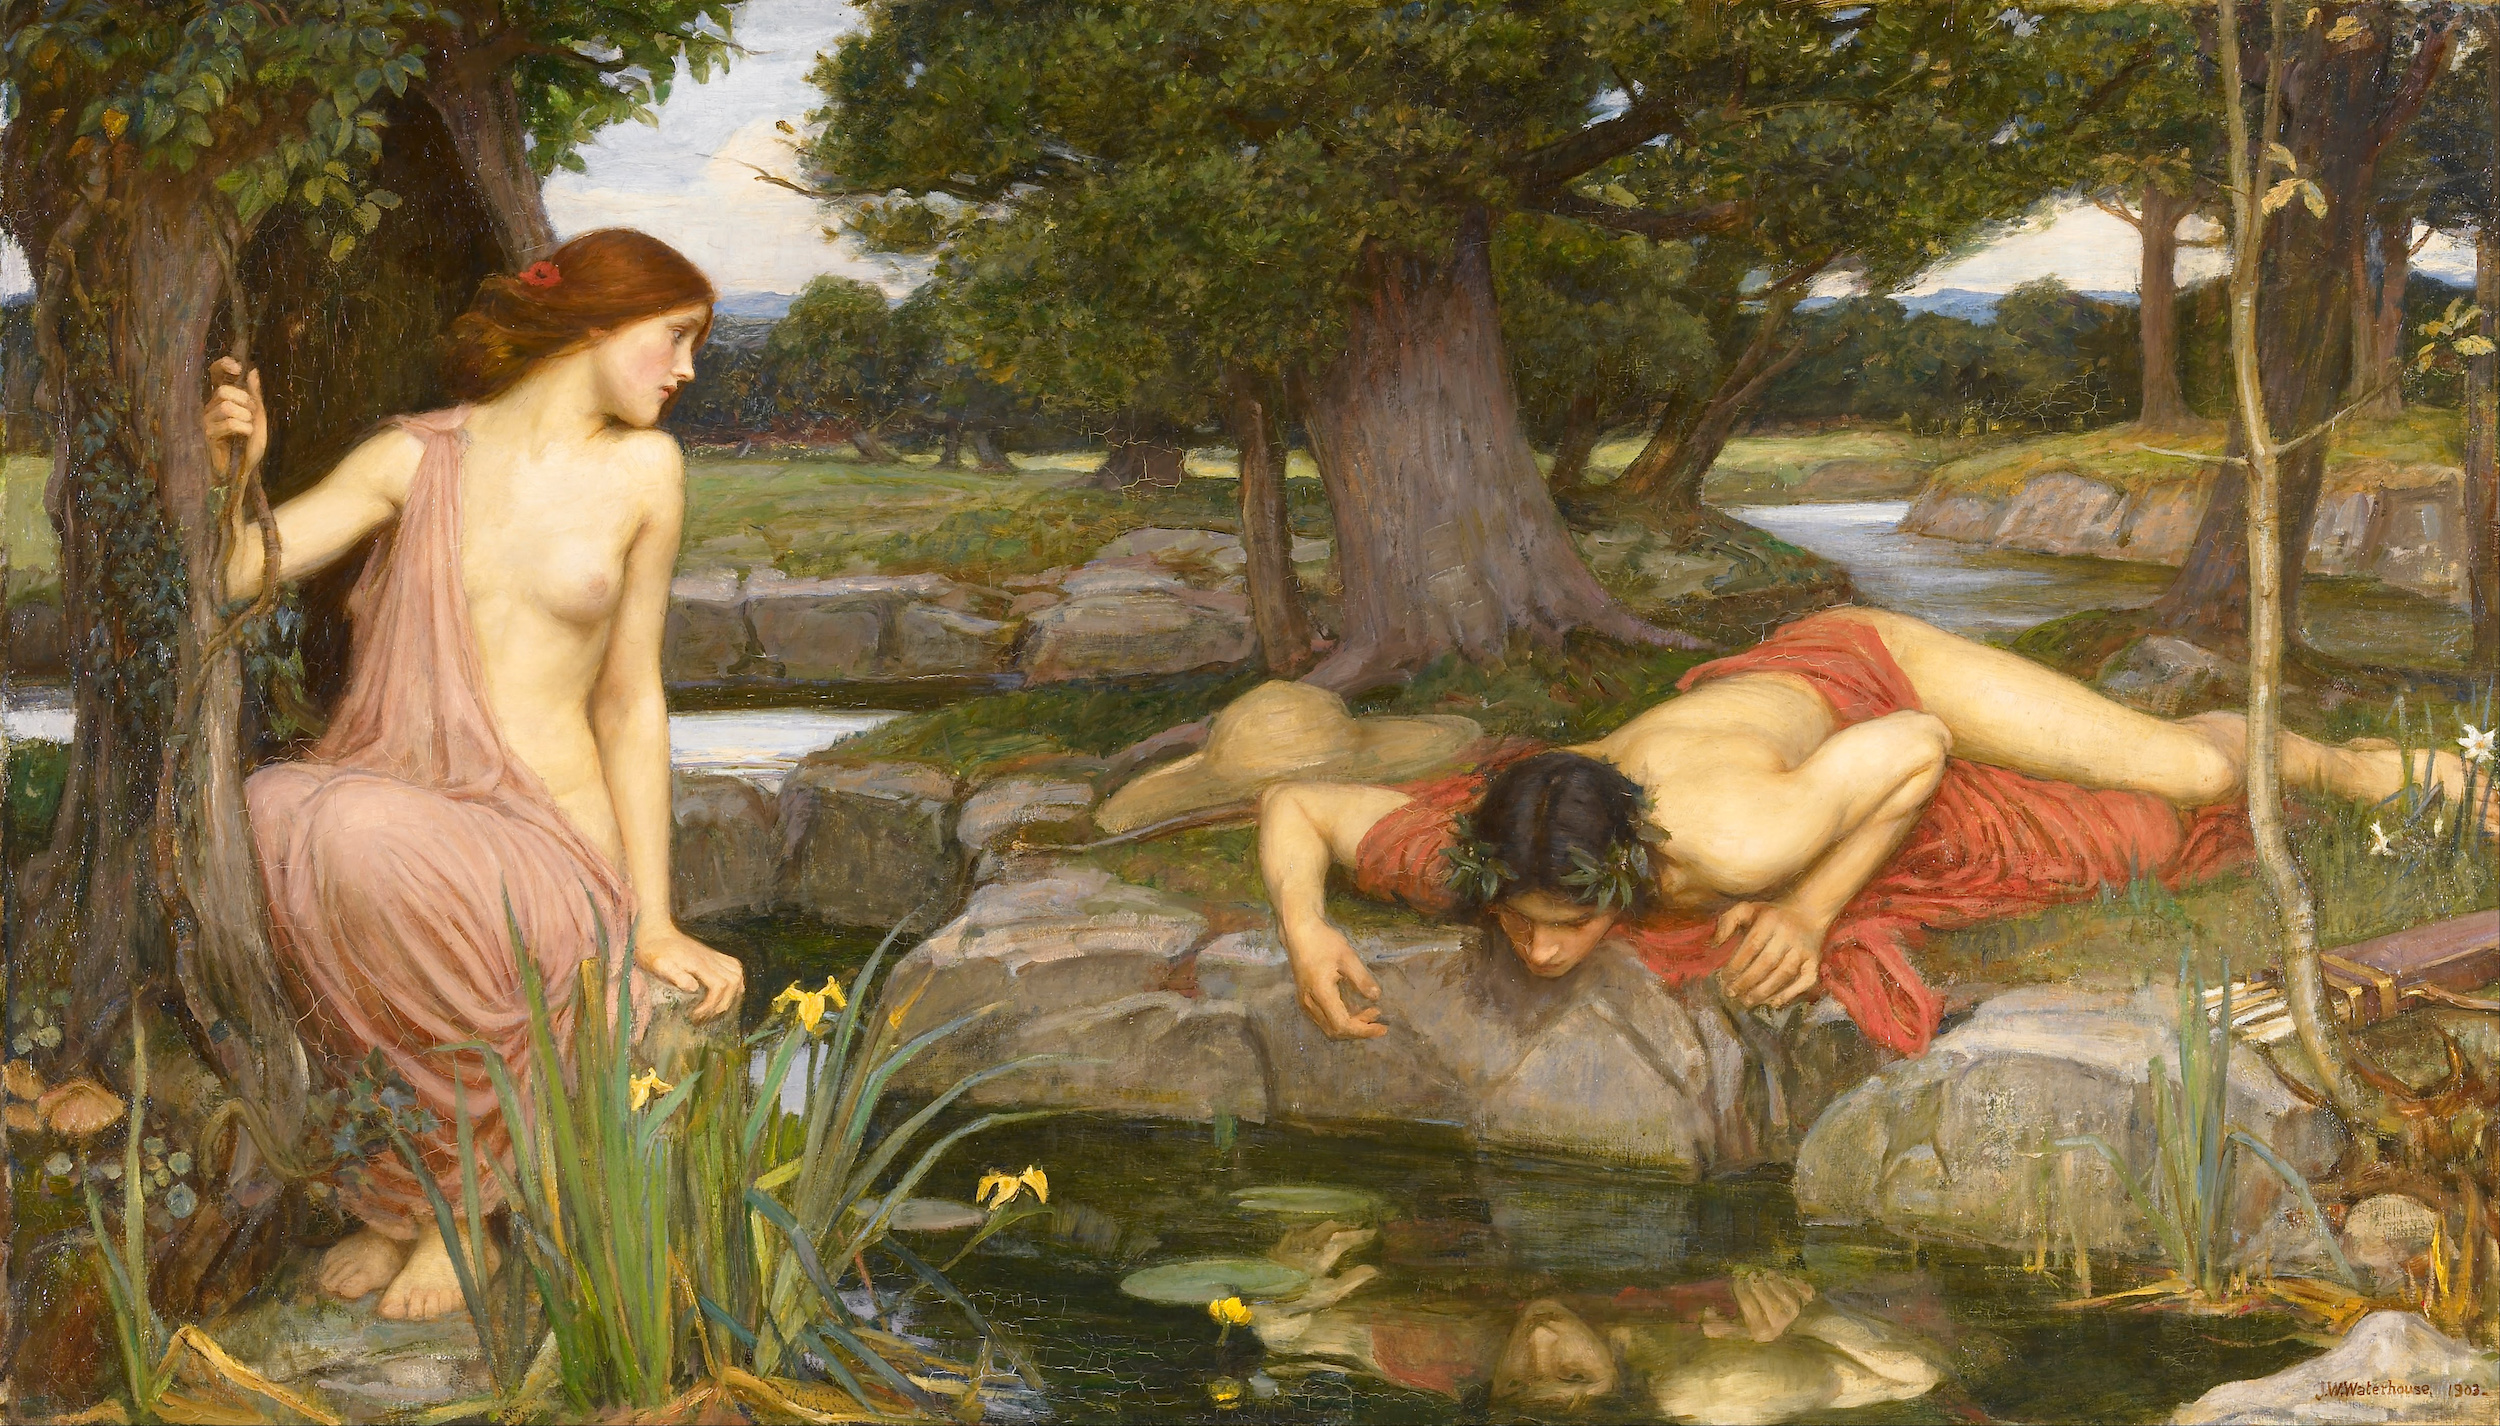  Эхо и Нарцисс by John William Waterhouse - 1903 - 109,2 см × 189,2 см 